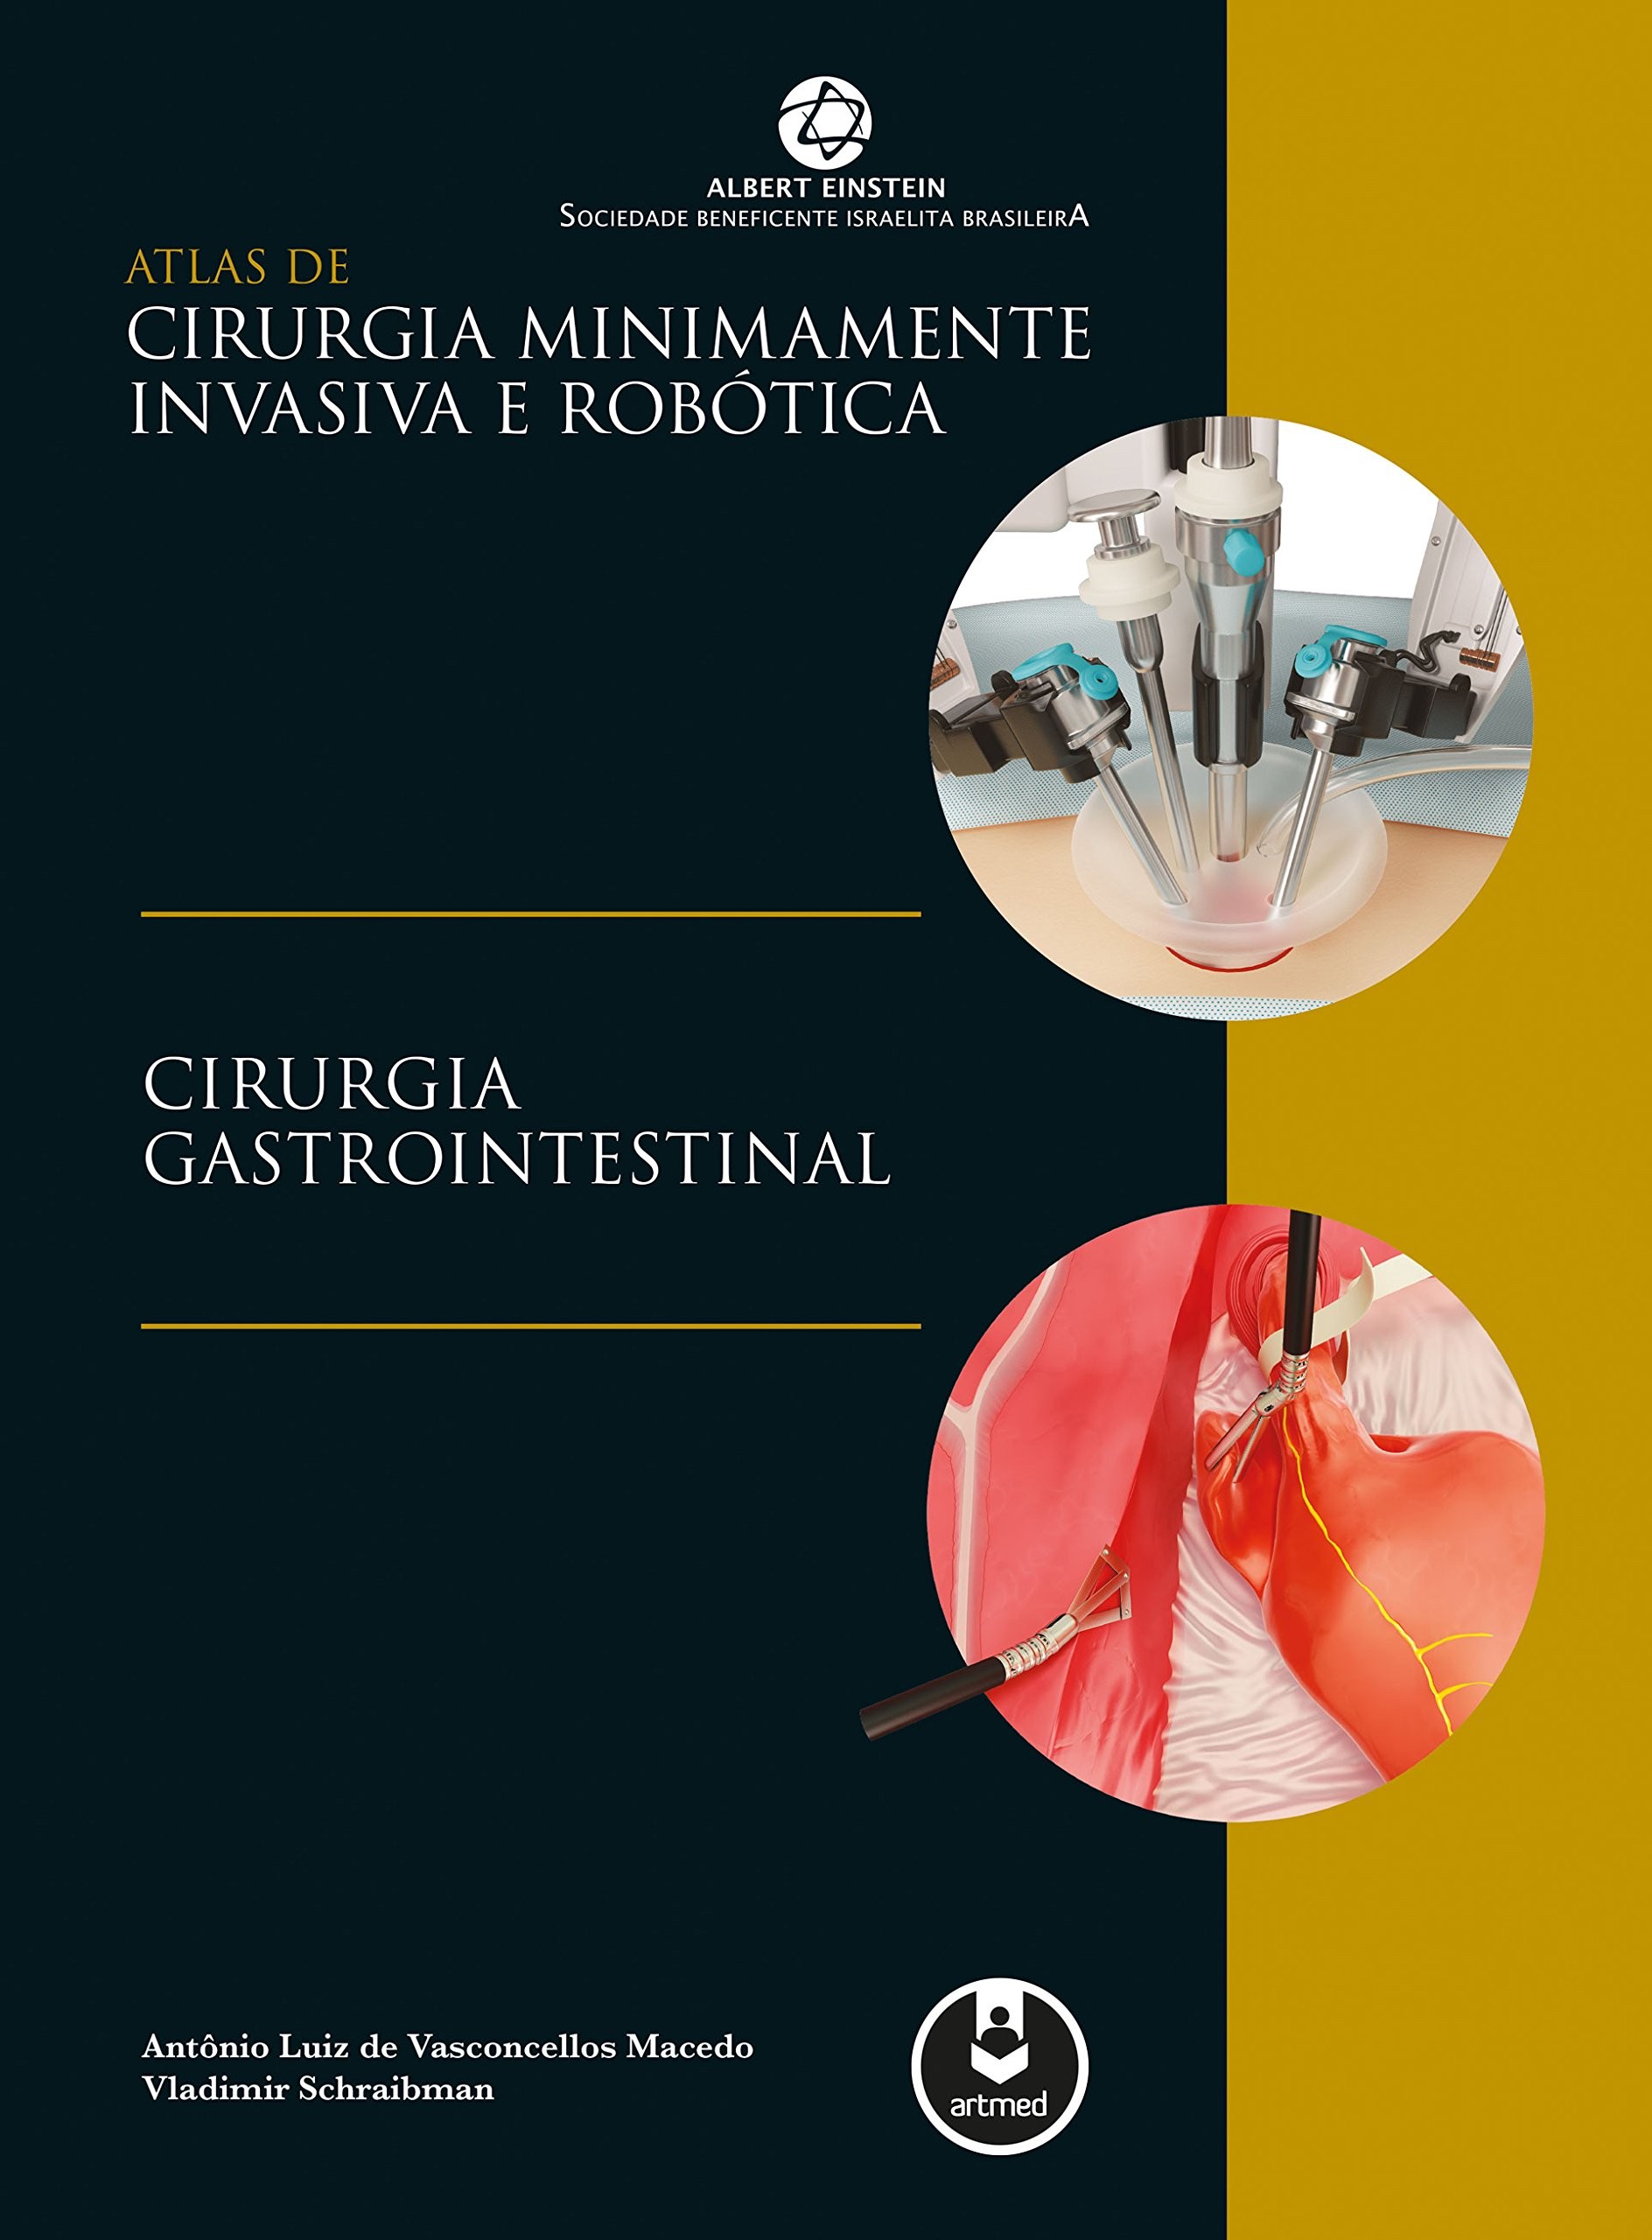 Atlas de Cirurgia Minimamente Invasiva e Robótica: Cirurgia Gastrointestinal